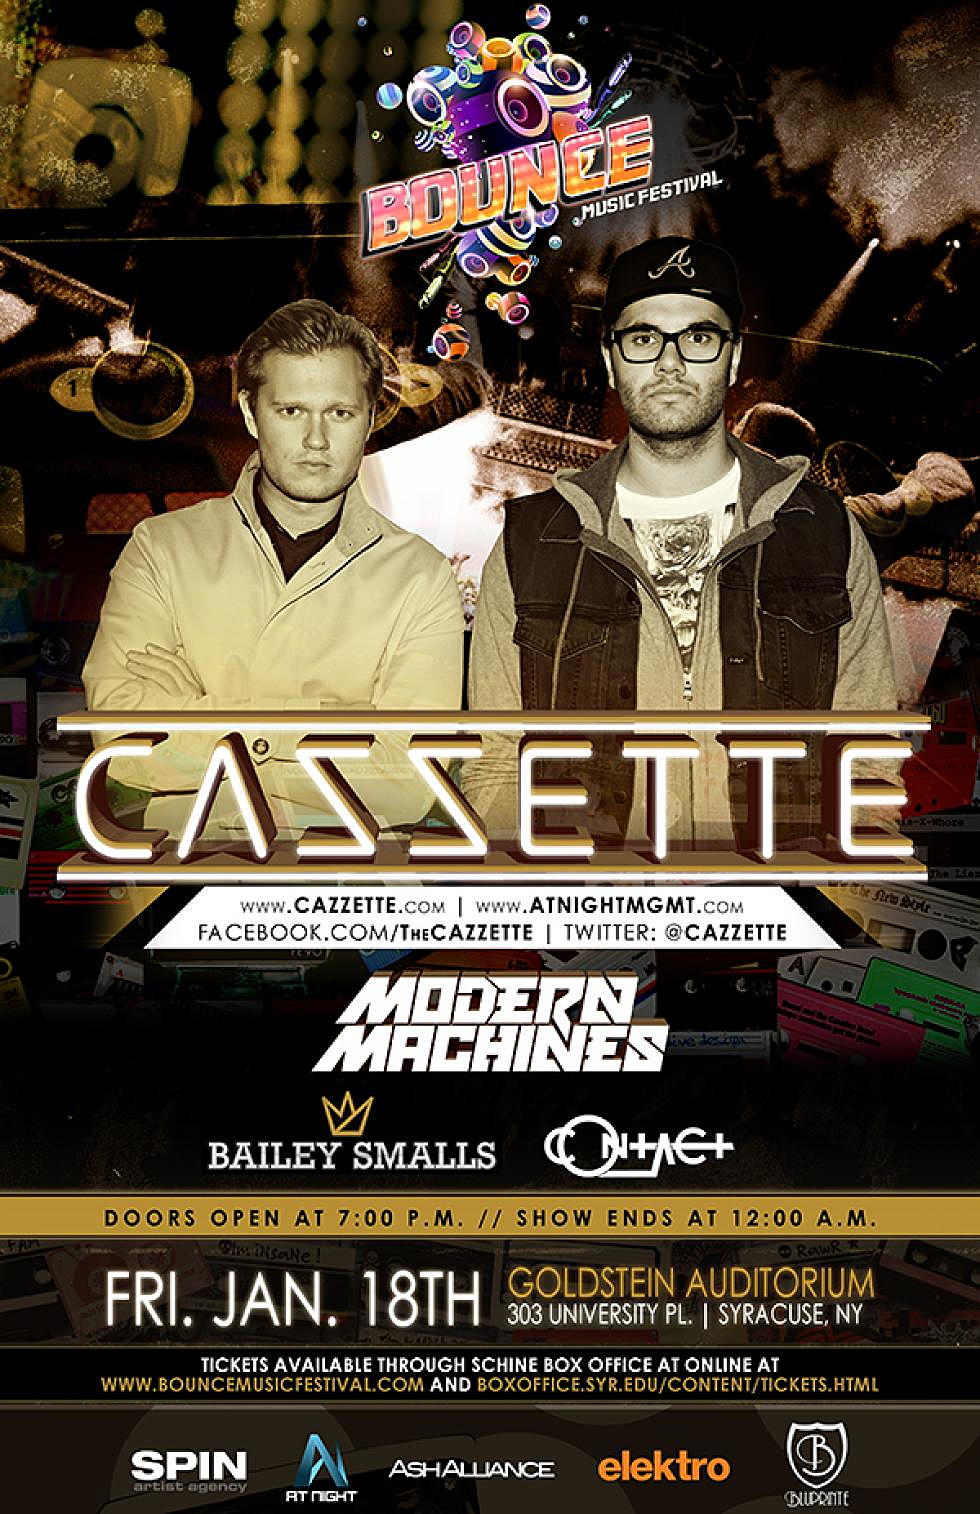 elektro exclusive: Cazzette Headlining Bounce Music Festival January 18th in NY